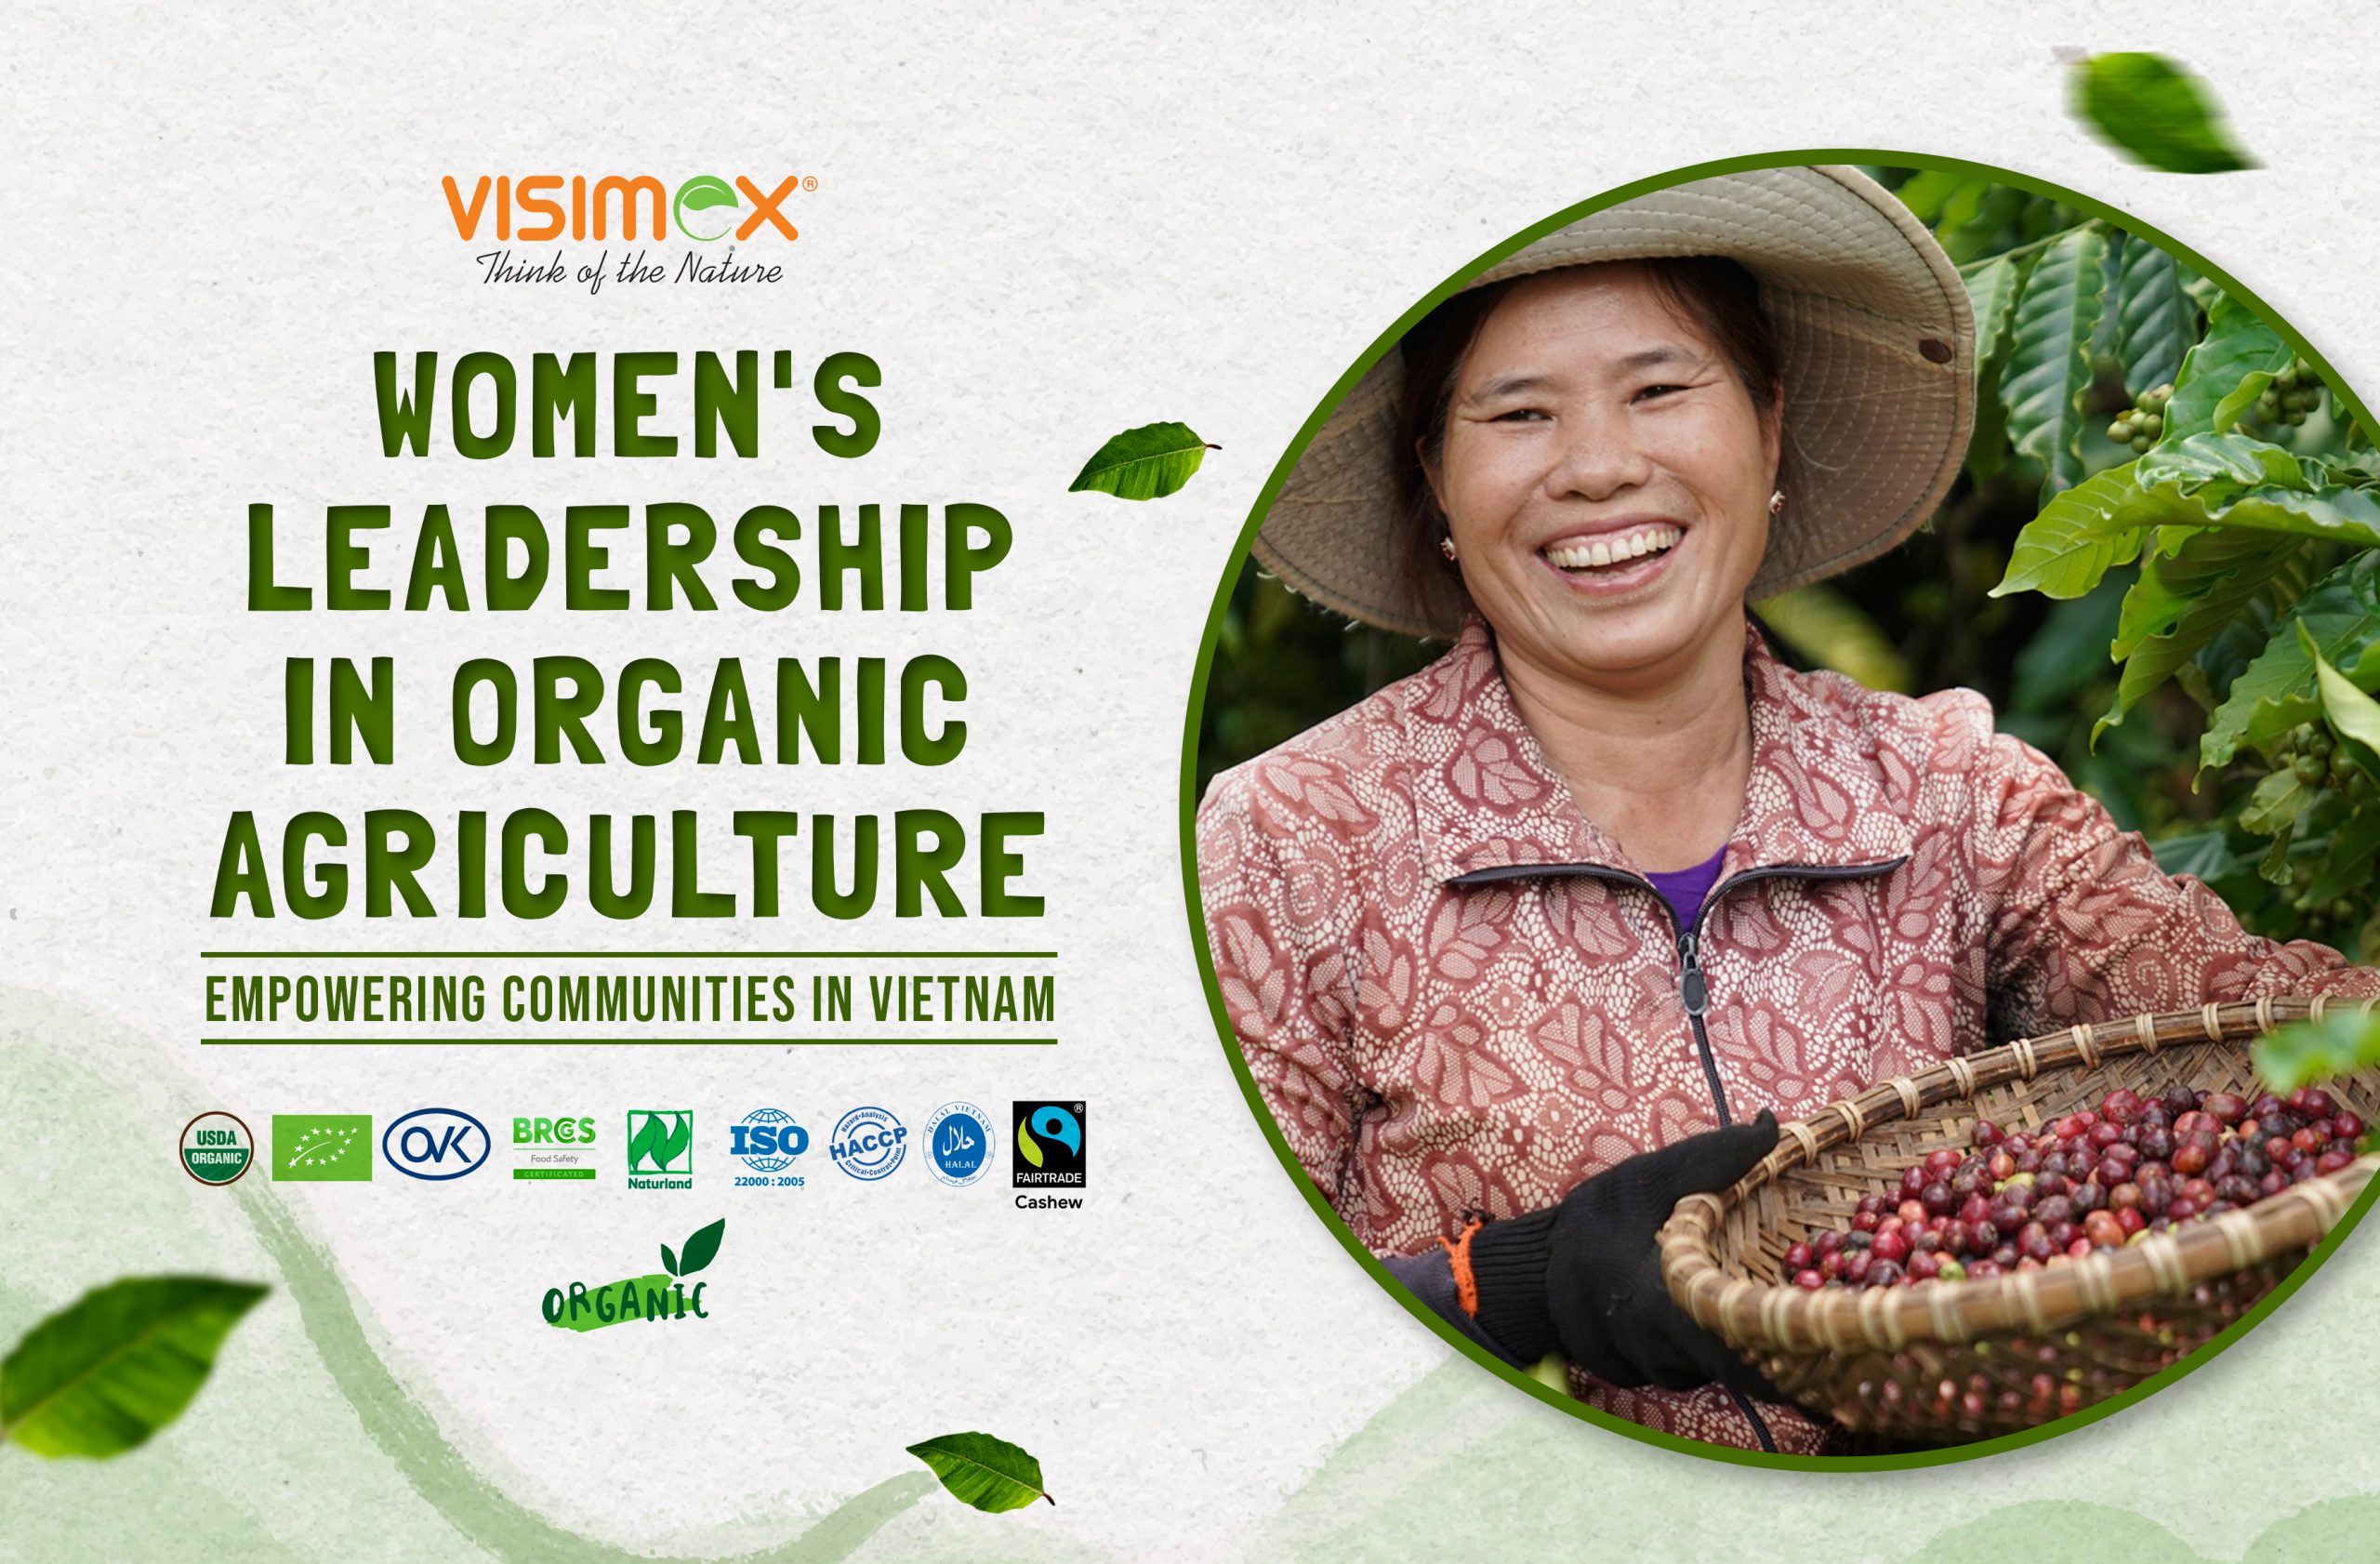 Women's Leadership in Organic Agriculture in Vietnam